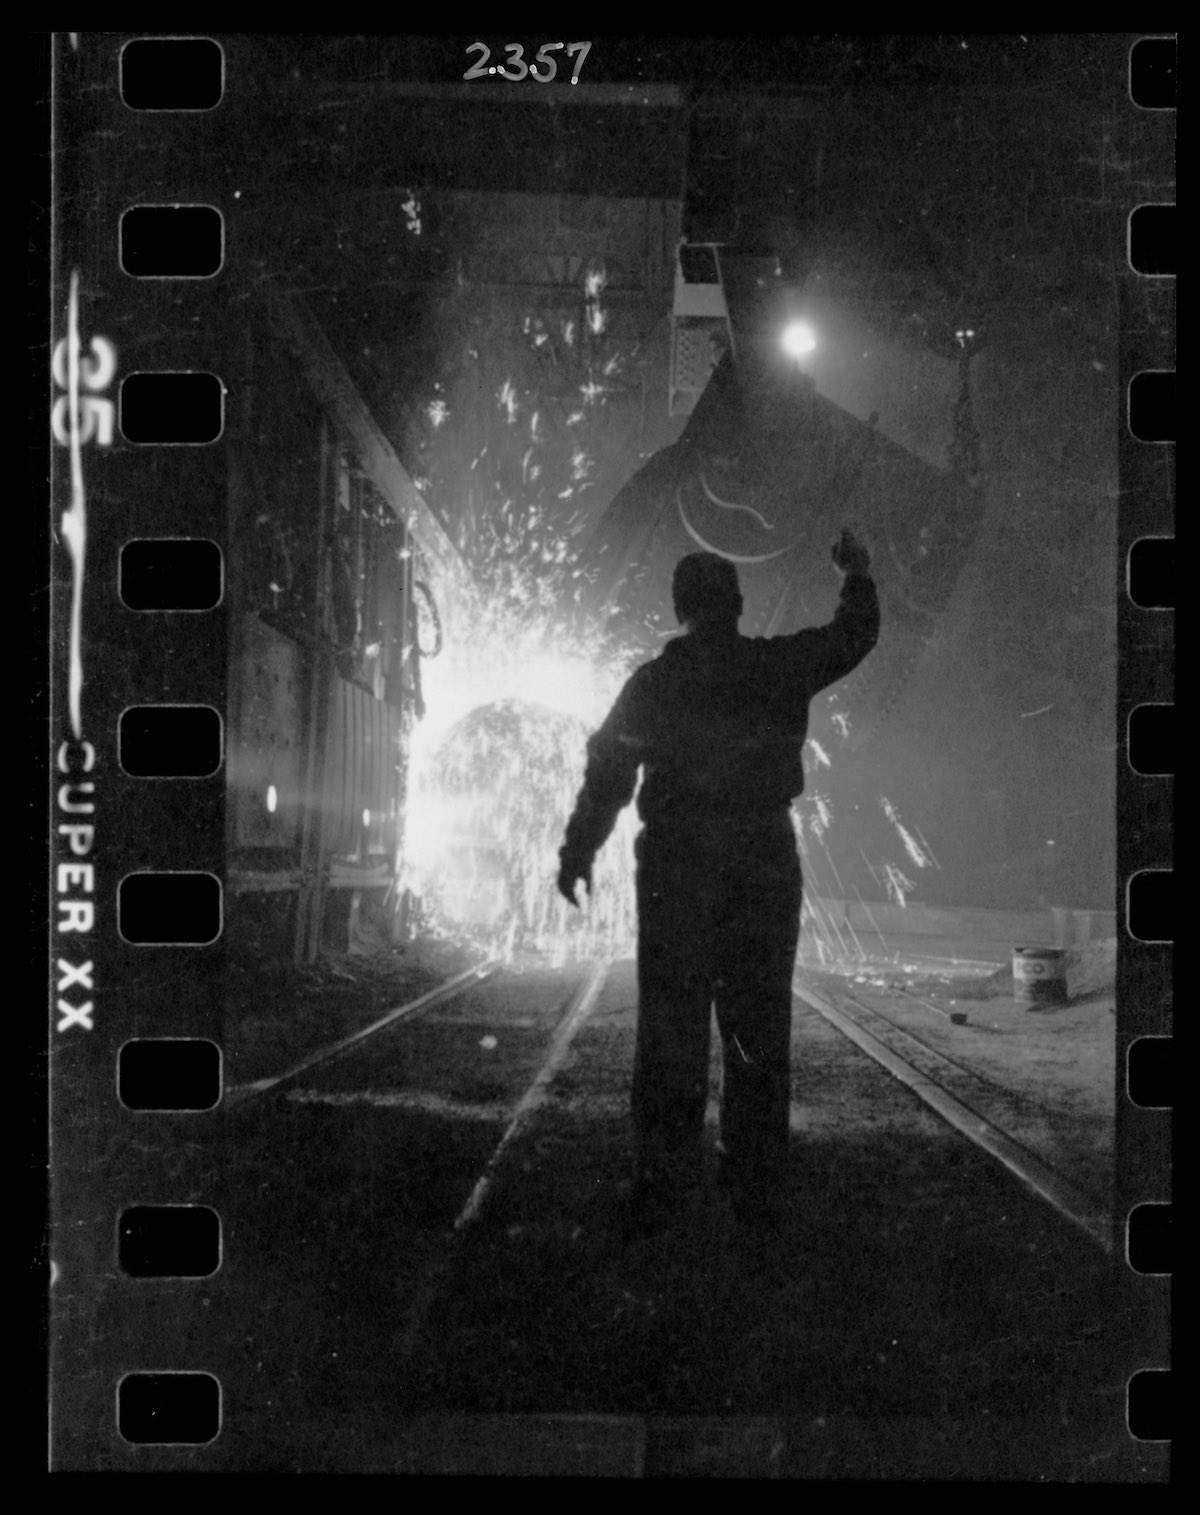 Stanley Kubrick steel worker Chicago